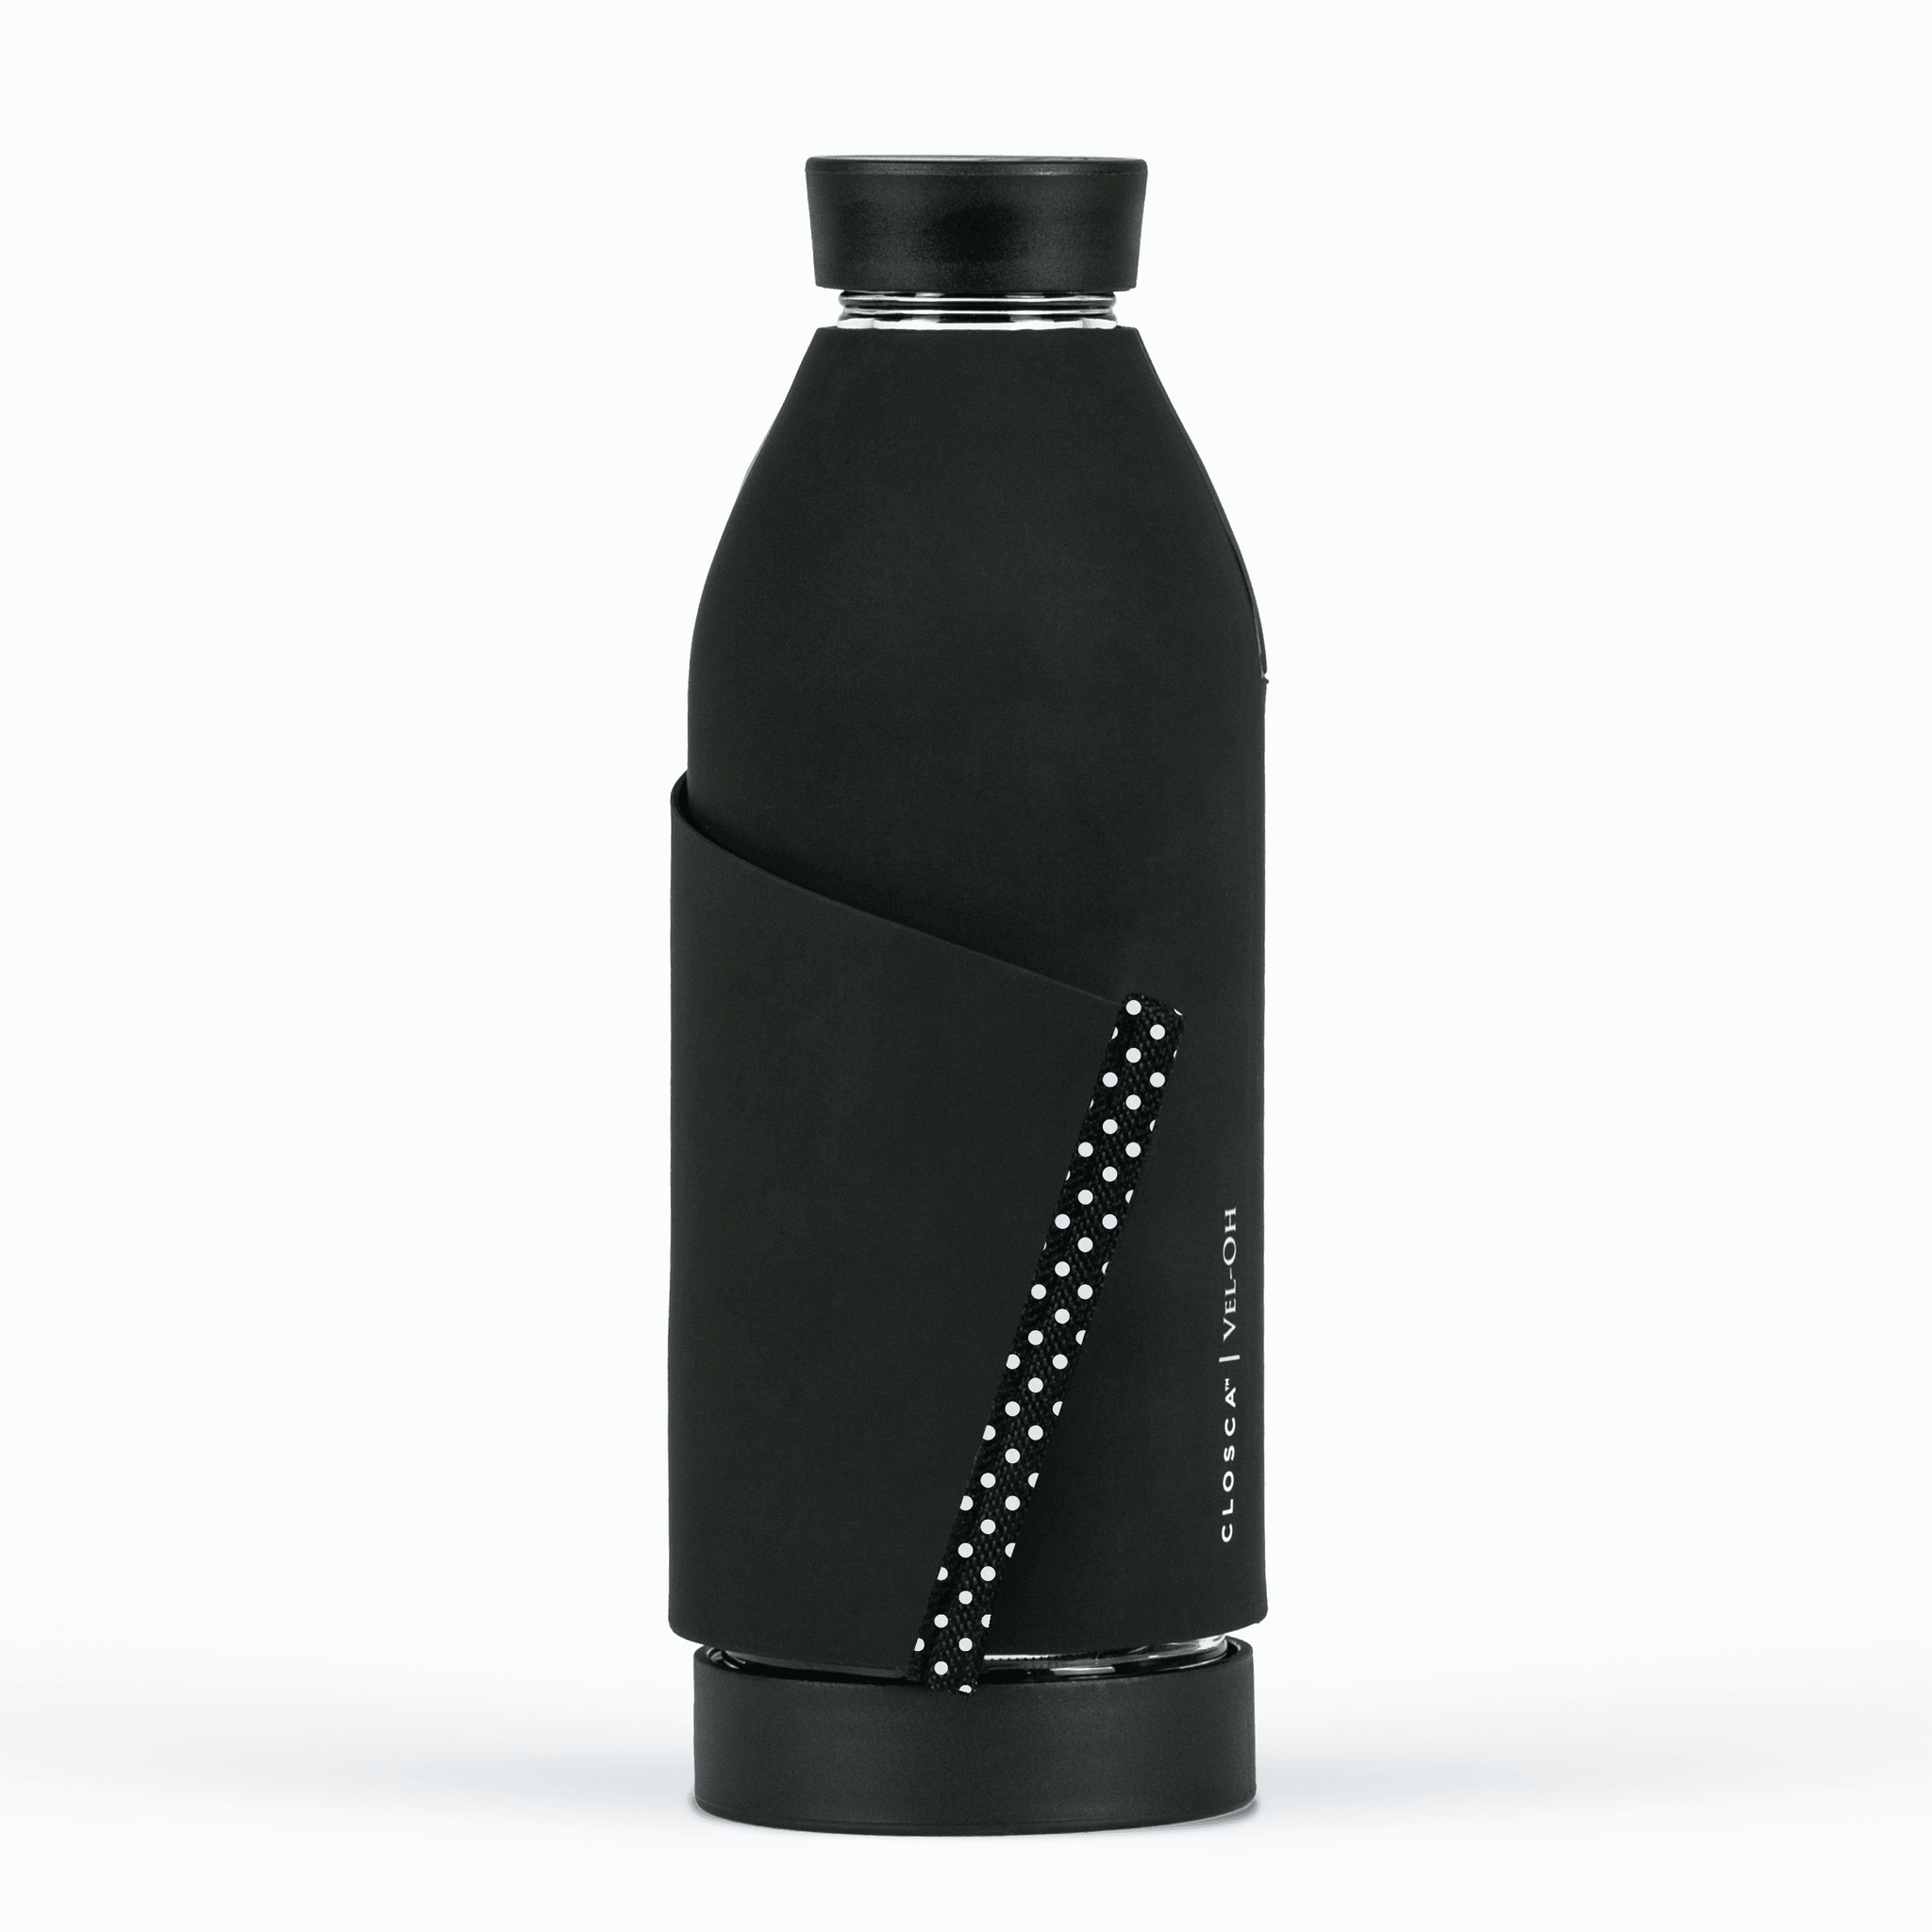 andthen.design-Closca x Vel-Oh bottle - Polkadot